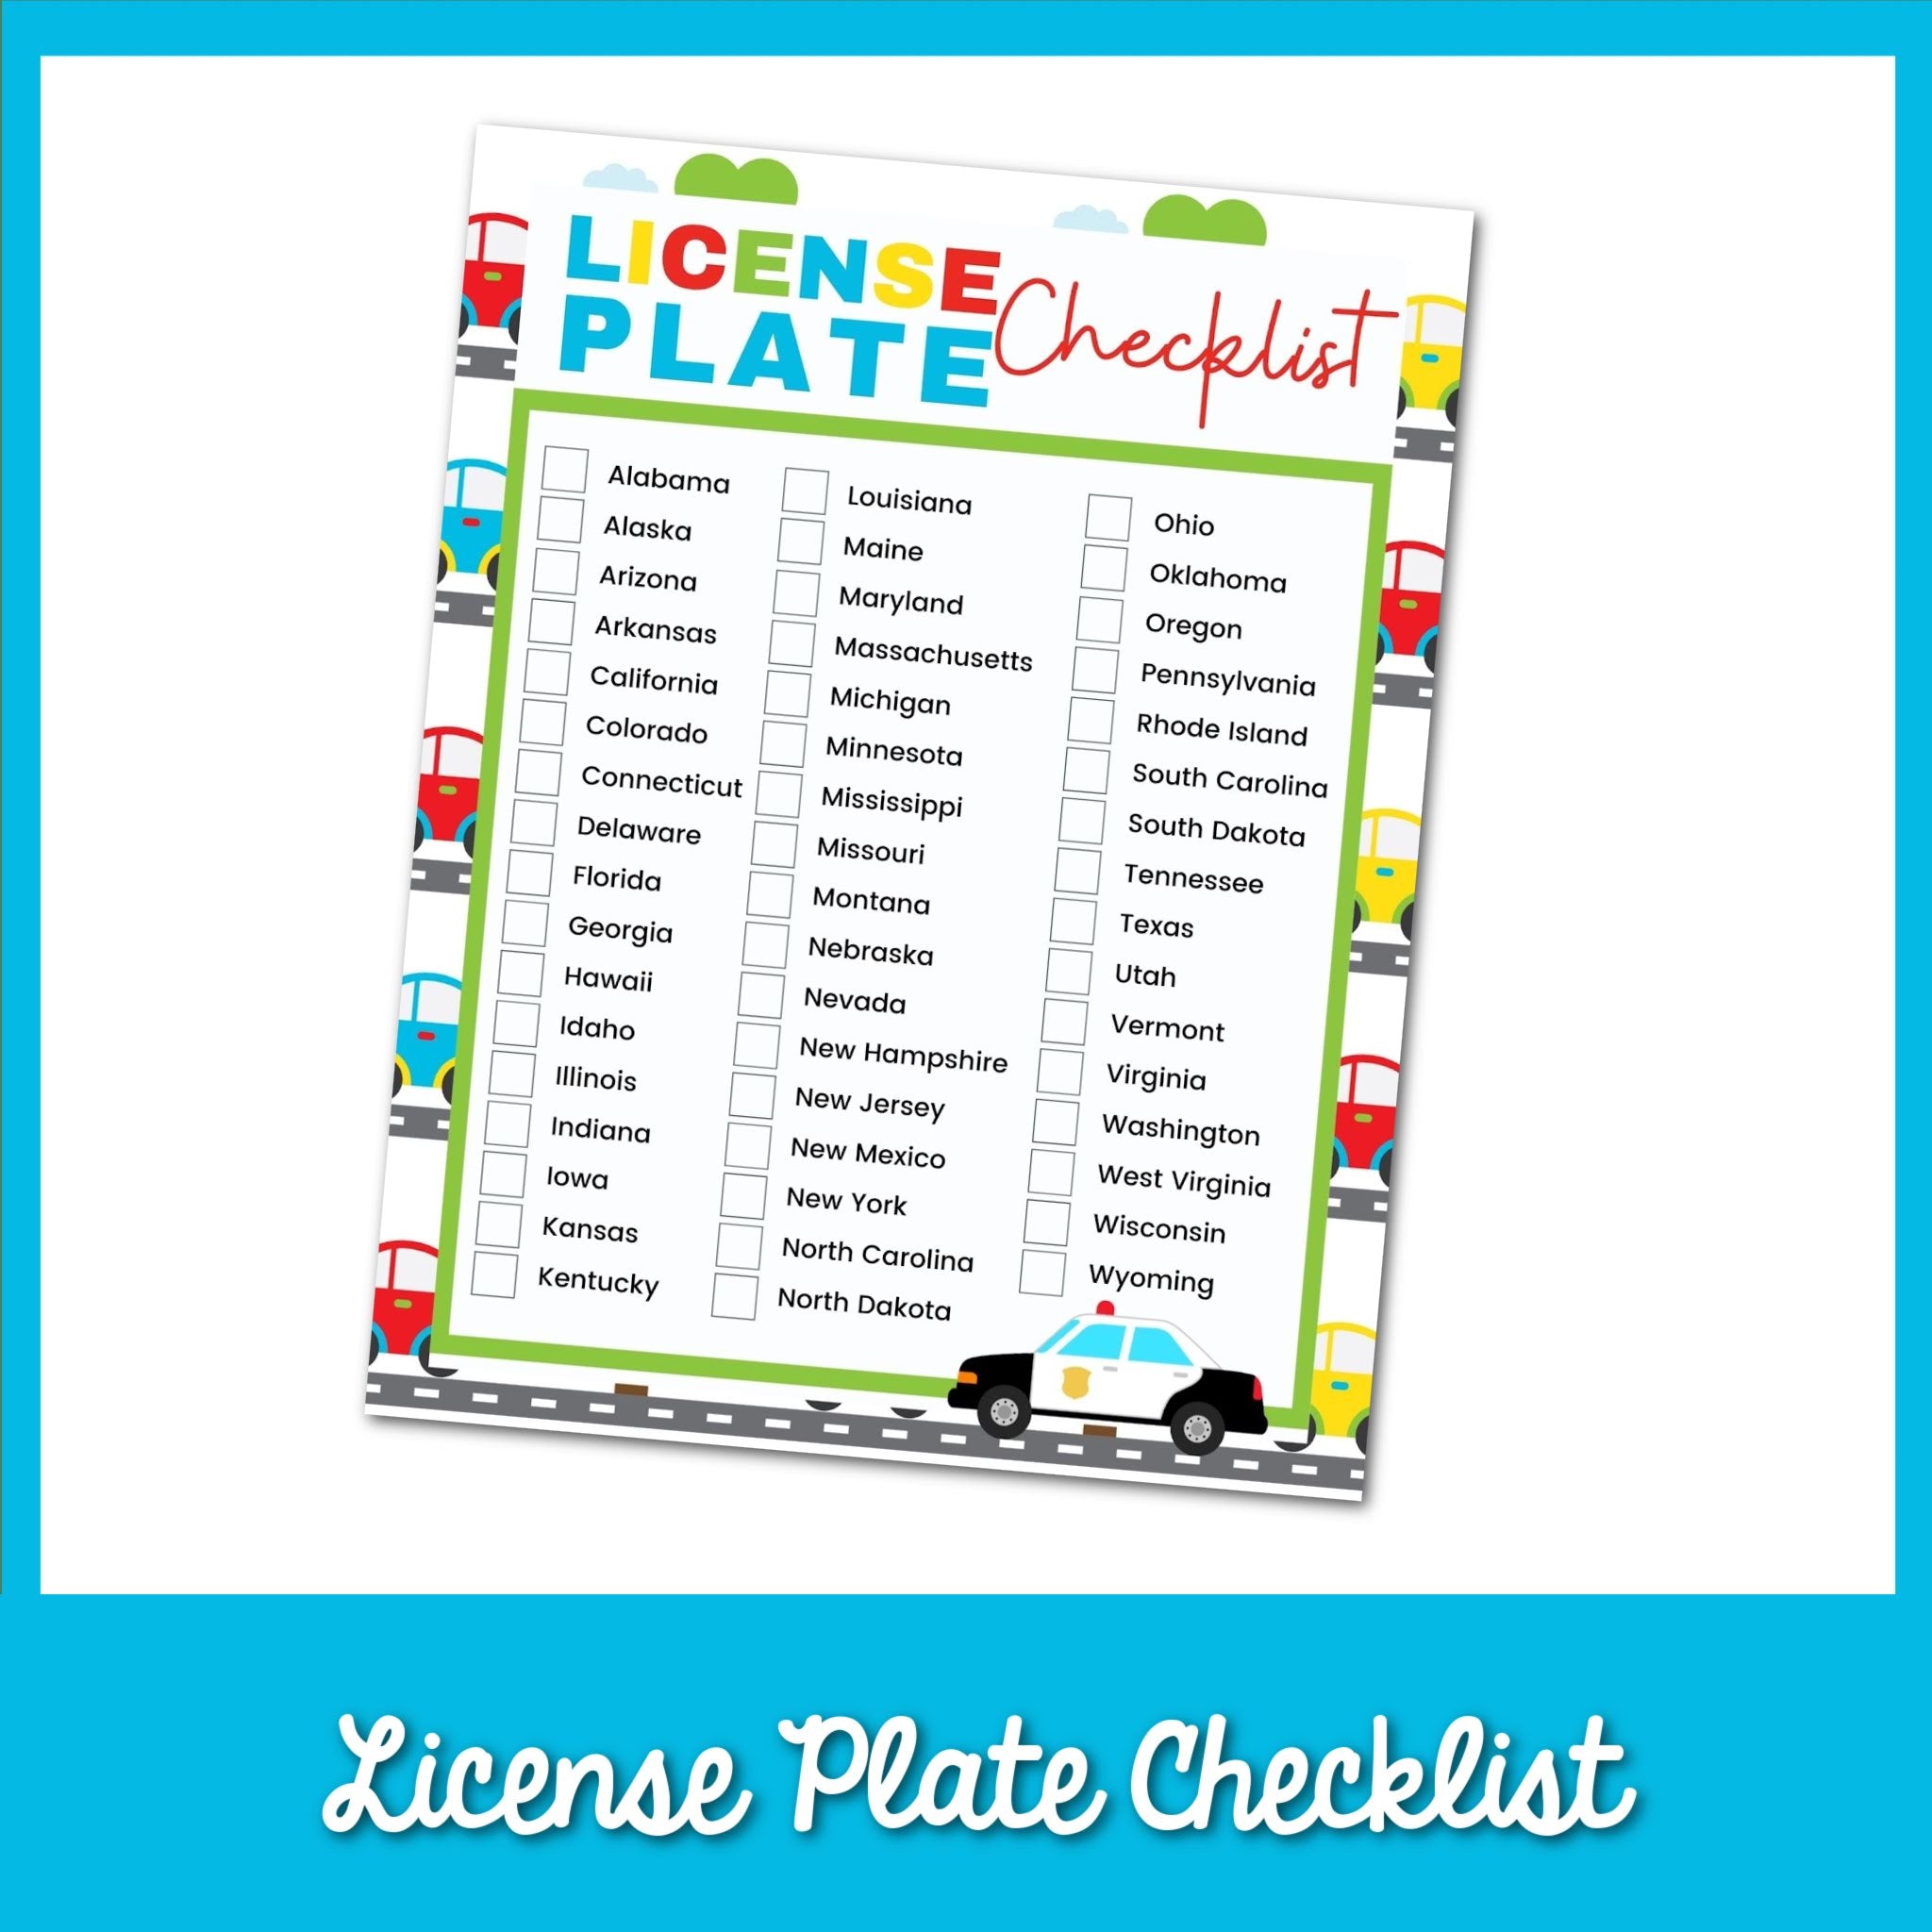 License Plate Checklist